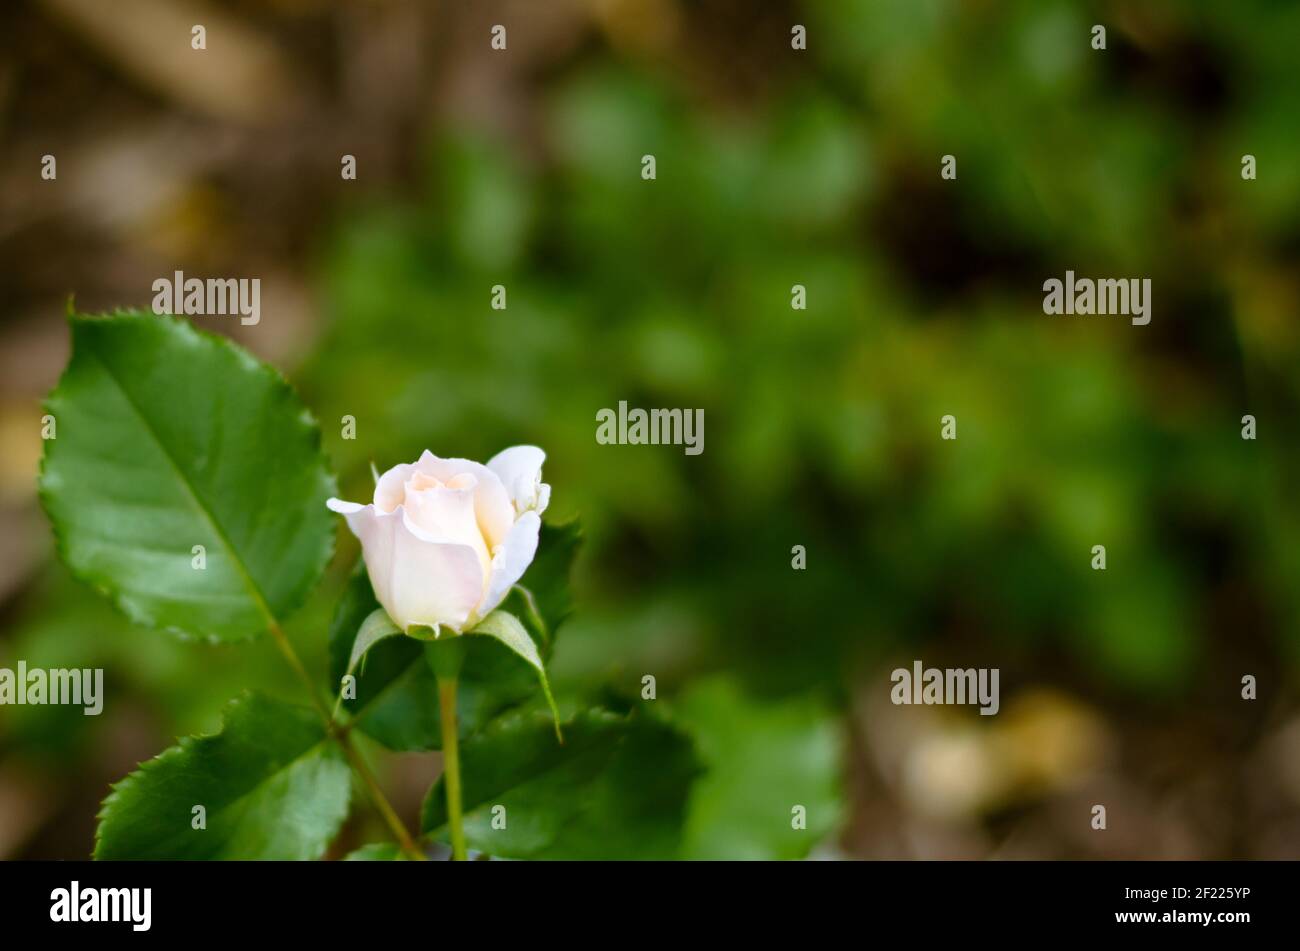 bud of white rose flower image Stock Photo